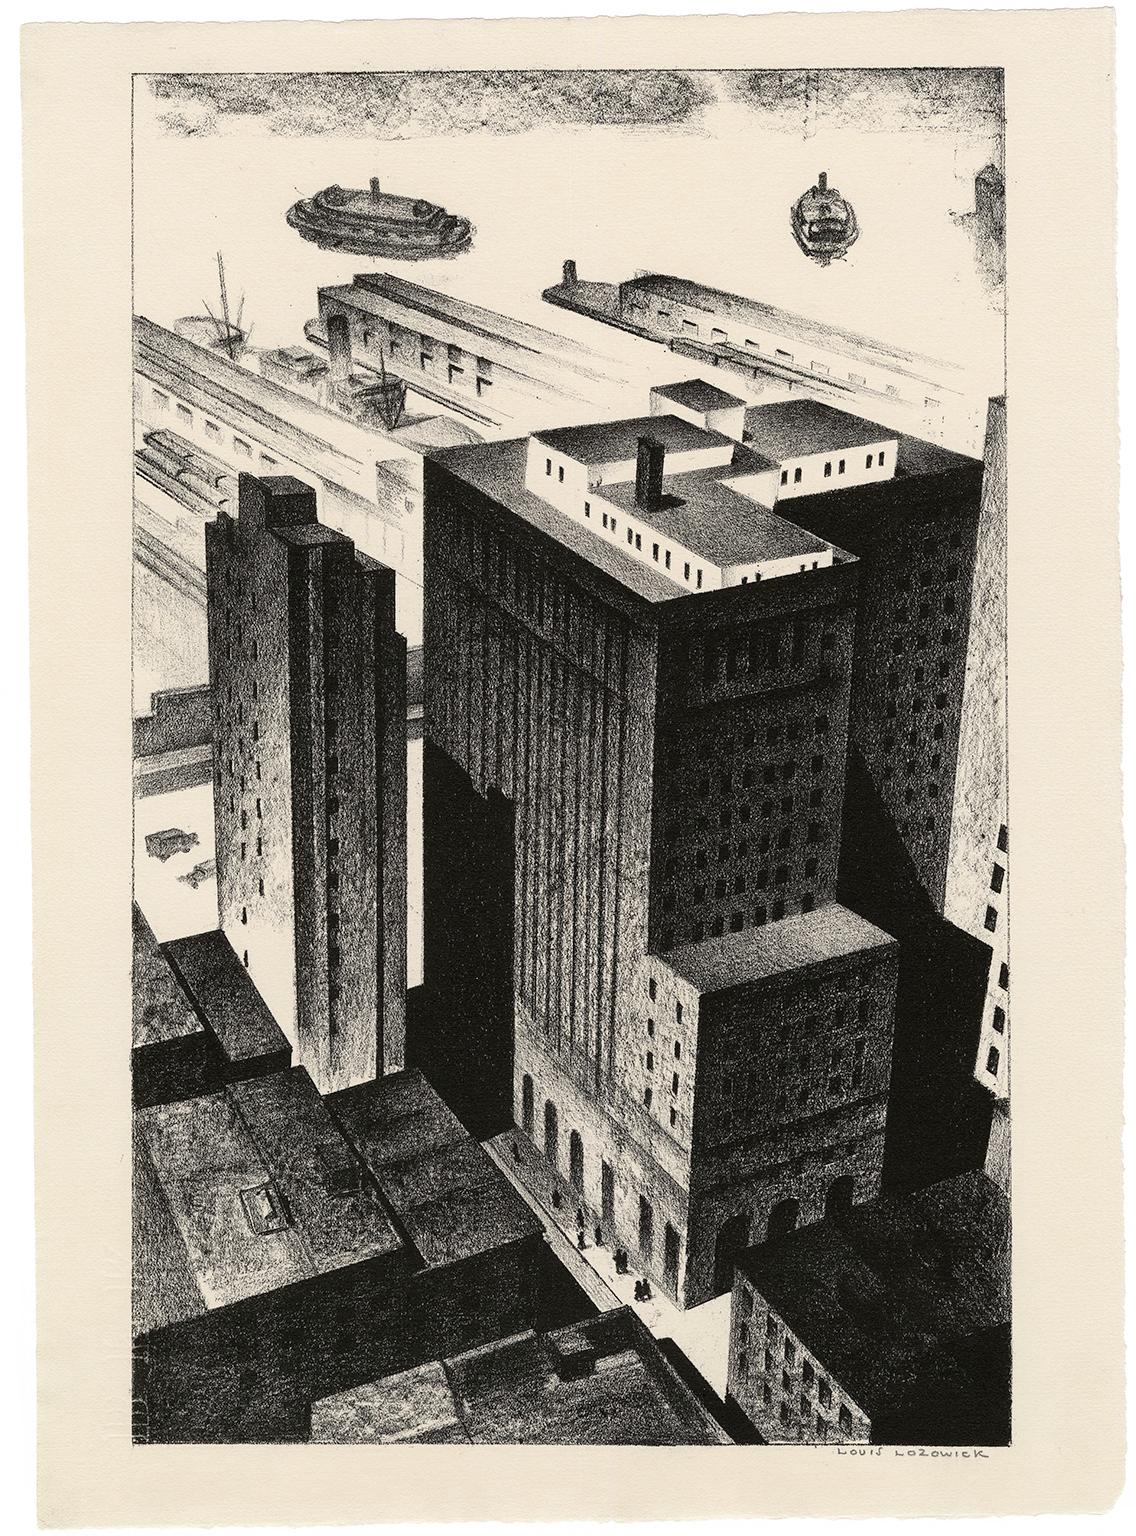 'Backyards of Broadway' — 1920s American Precisionism, New York City - Print by Louis Lozowick